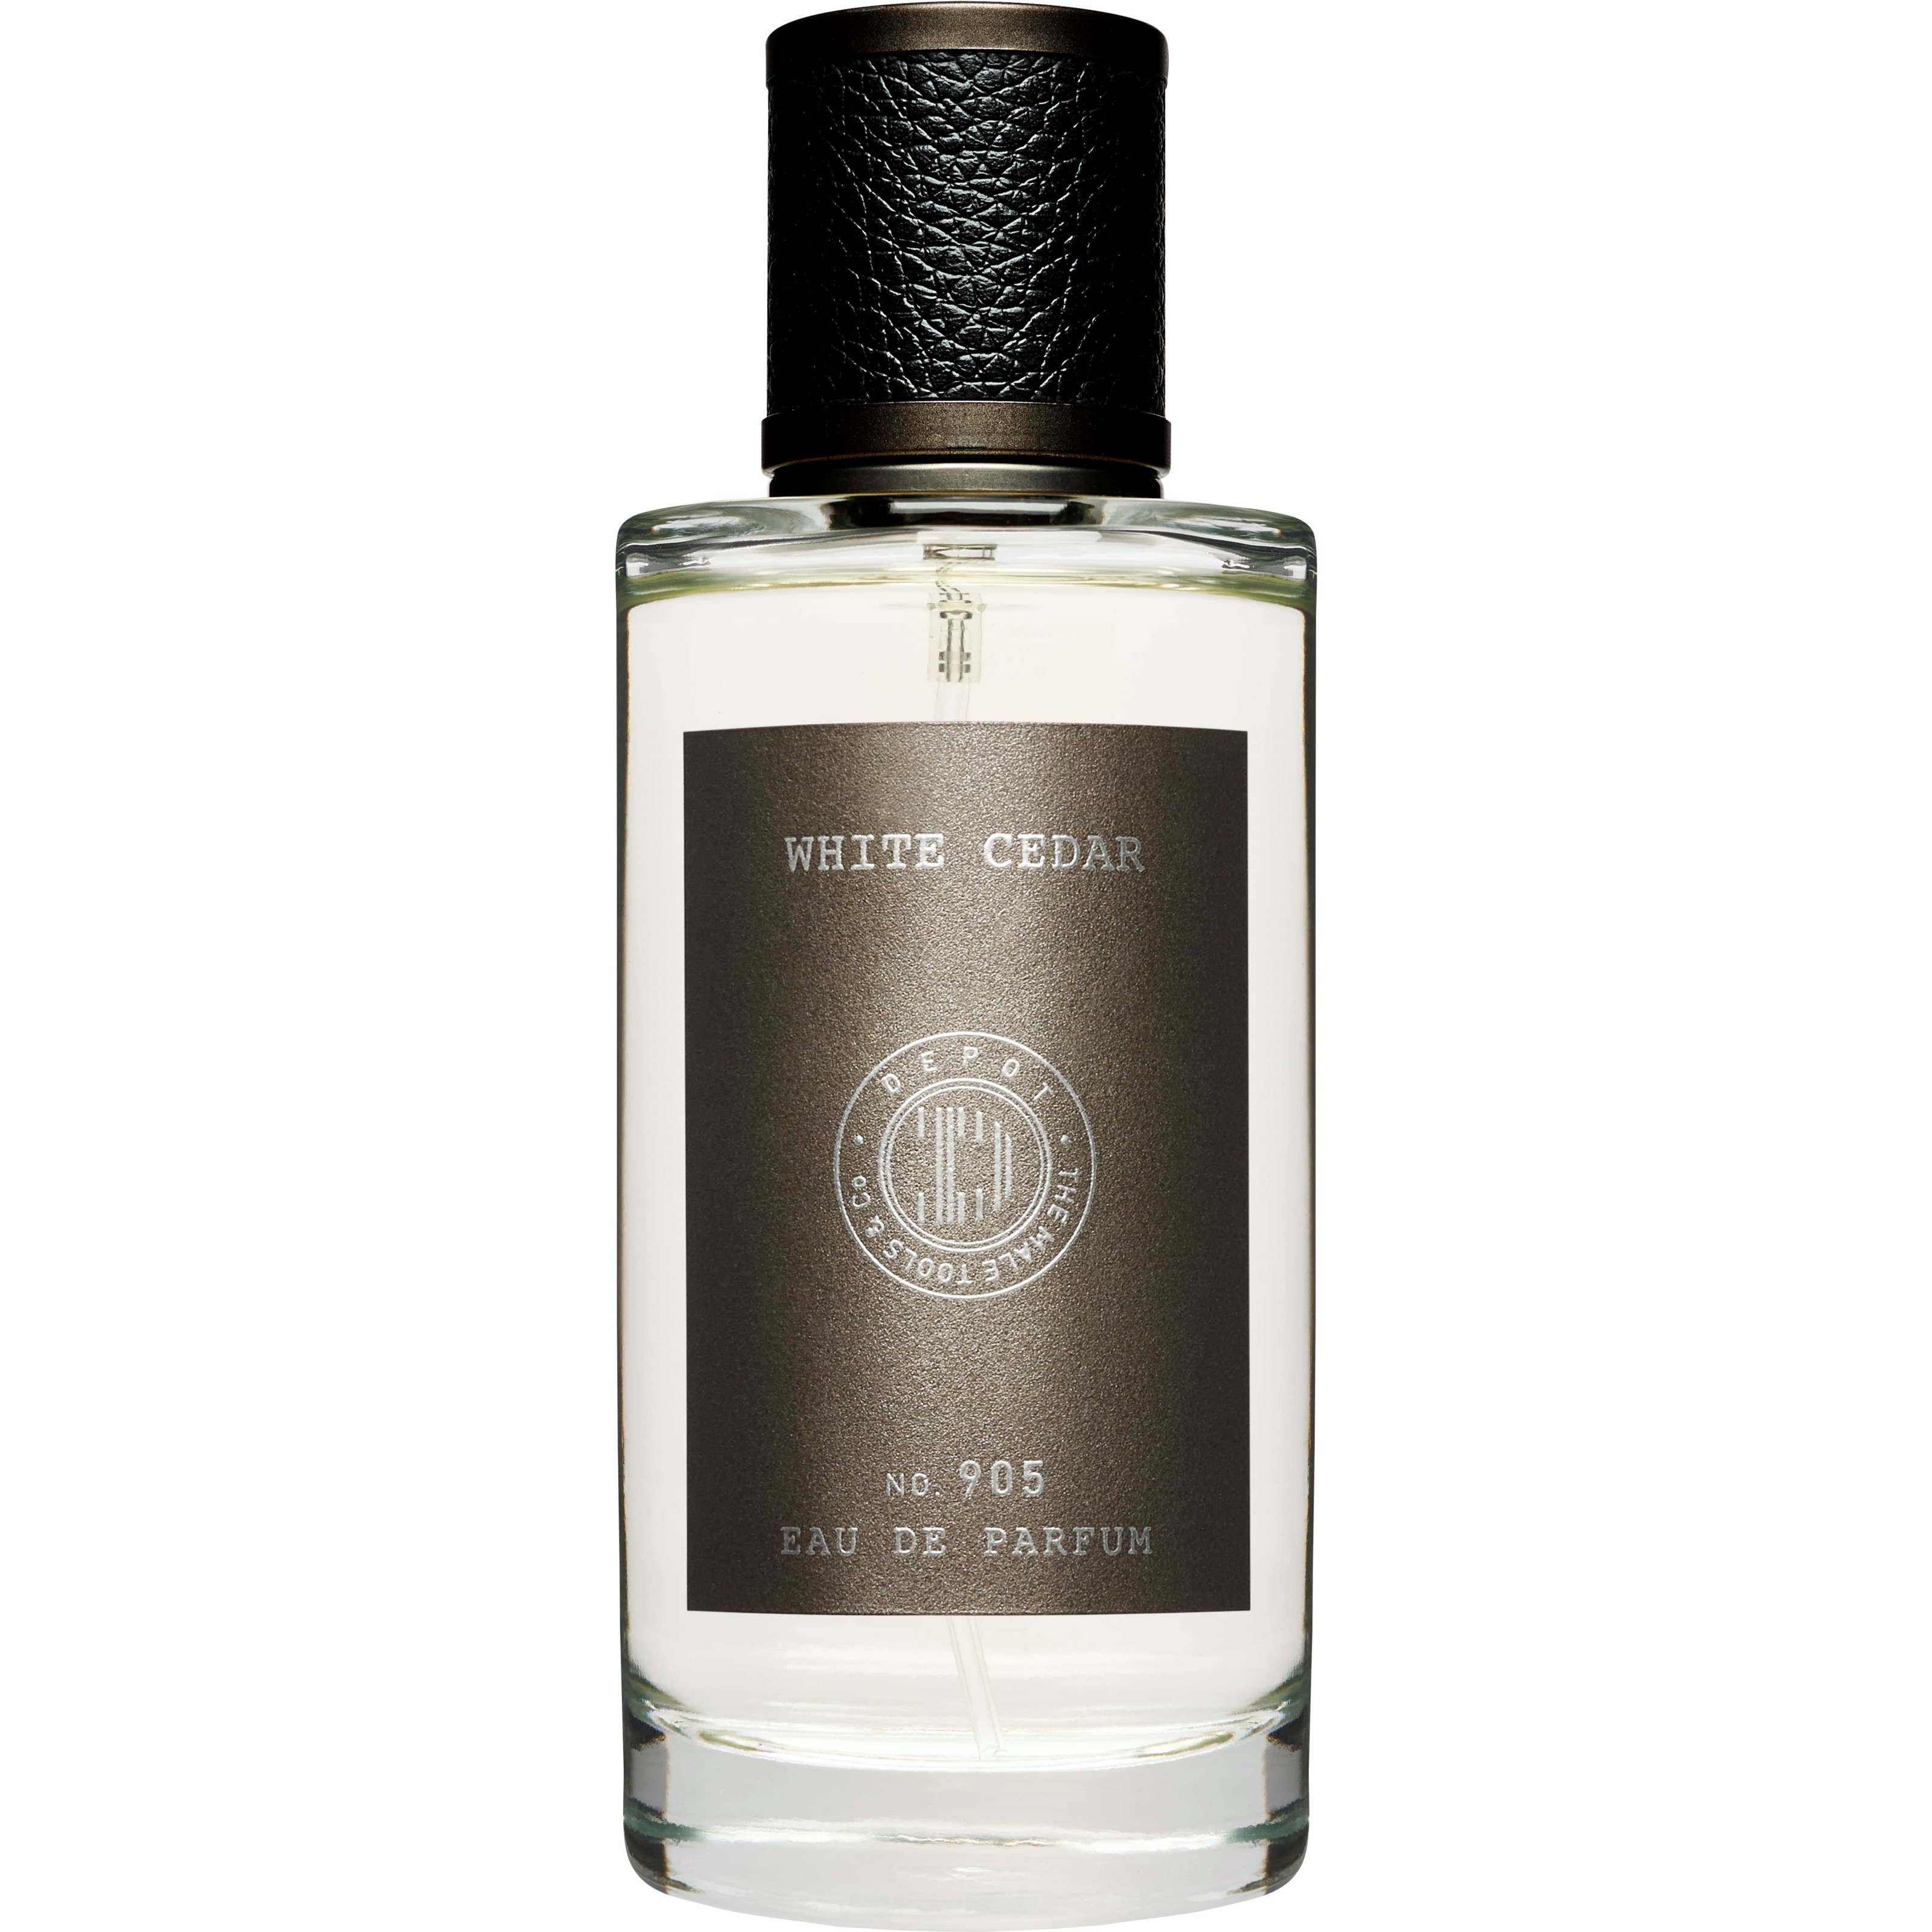 DEPOT MALE TOOLS No. 905 Eau De Parfum White Cedar 100 ml